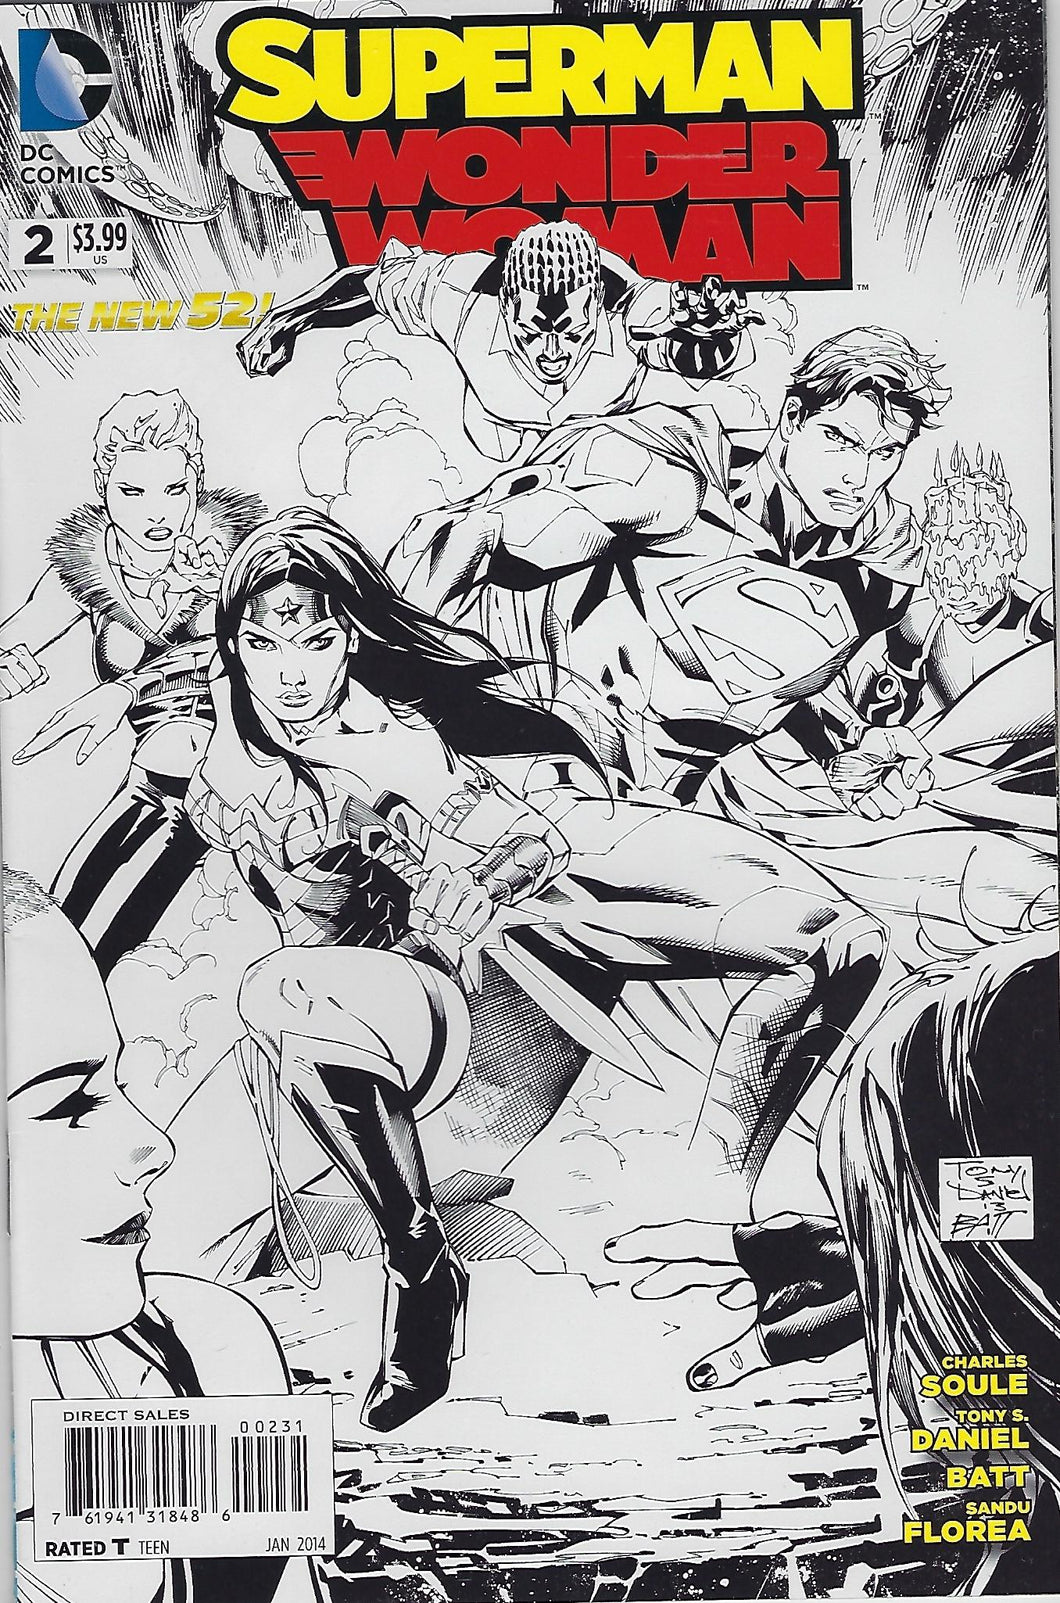 Superman Wonder Woman #2 RARE Tony Daniel Black & White Variant  !!  NM